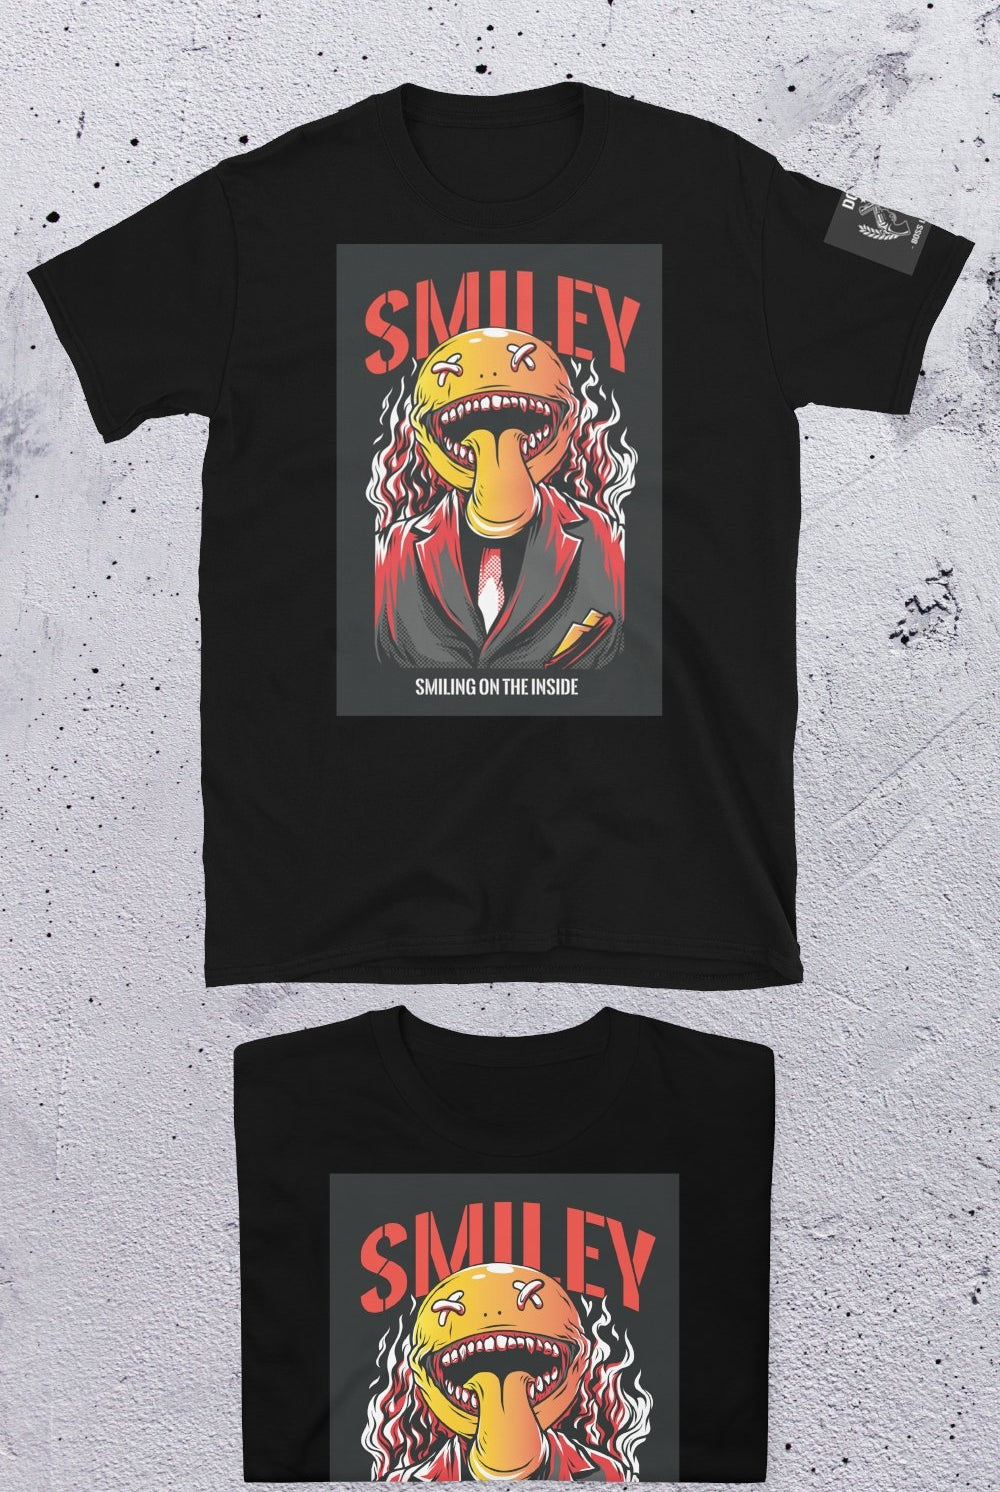 Men's Graphic T-Shirt - SMILEY - Gamer Tee - Men's Graphic T-Shirt - DRAGON FOXX™ - 6382885_474 - Black - S - Dragon Foxx™ - Dragon Foxx™ Gamer T-Shirt - Gamer Tee